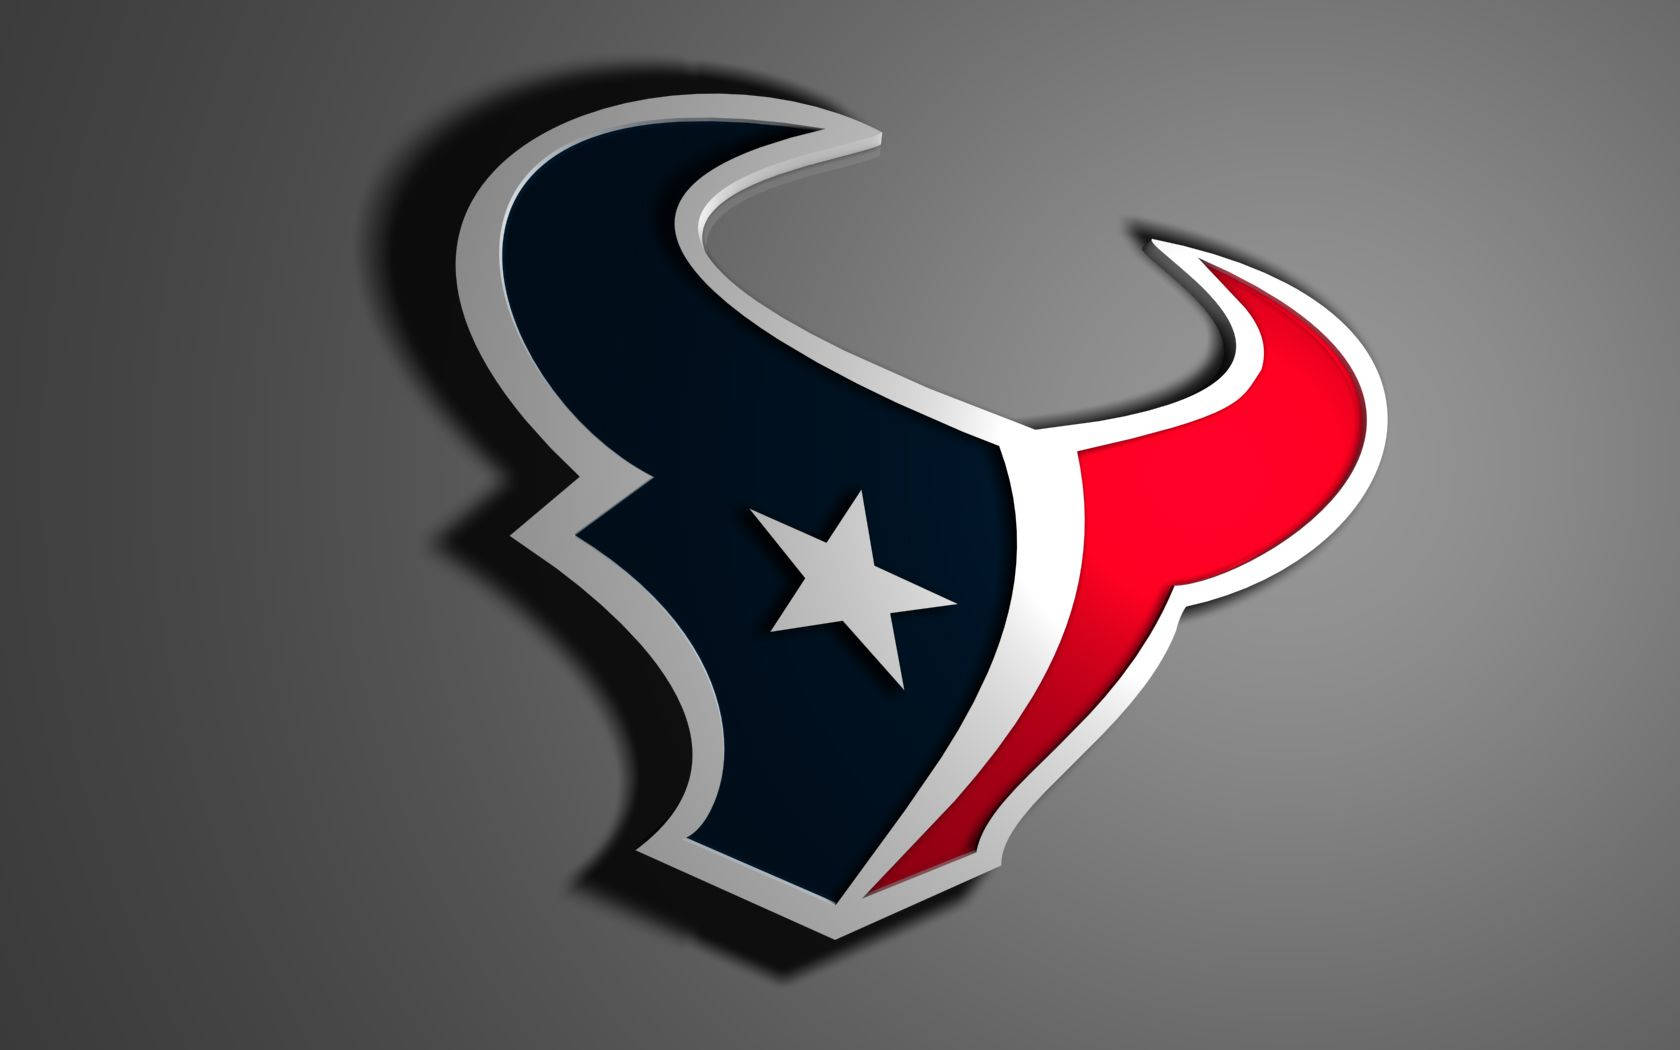 Logotipode Los Houston Texans, Equipos De La Nfl. Fondo de pantalla